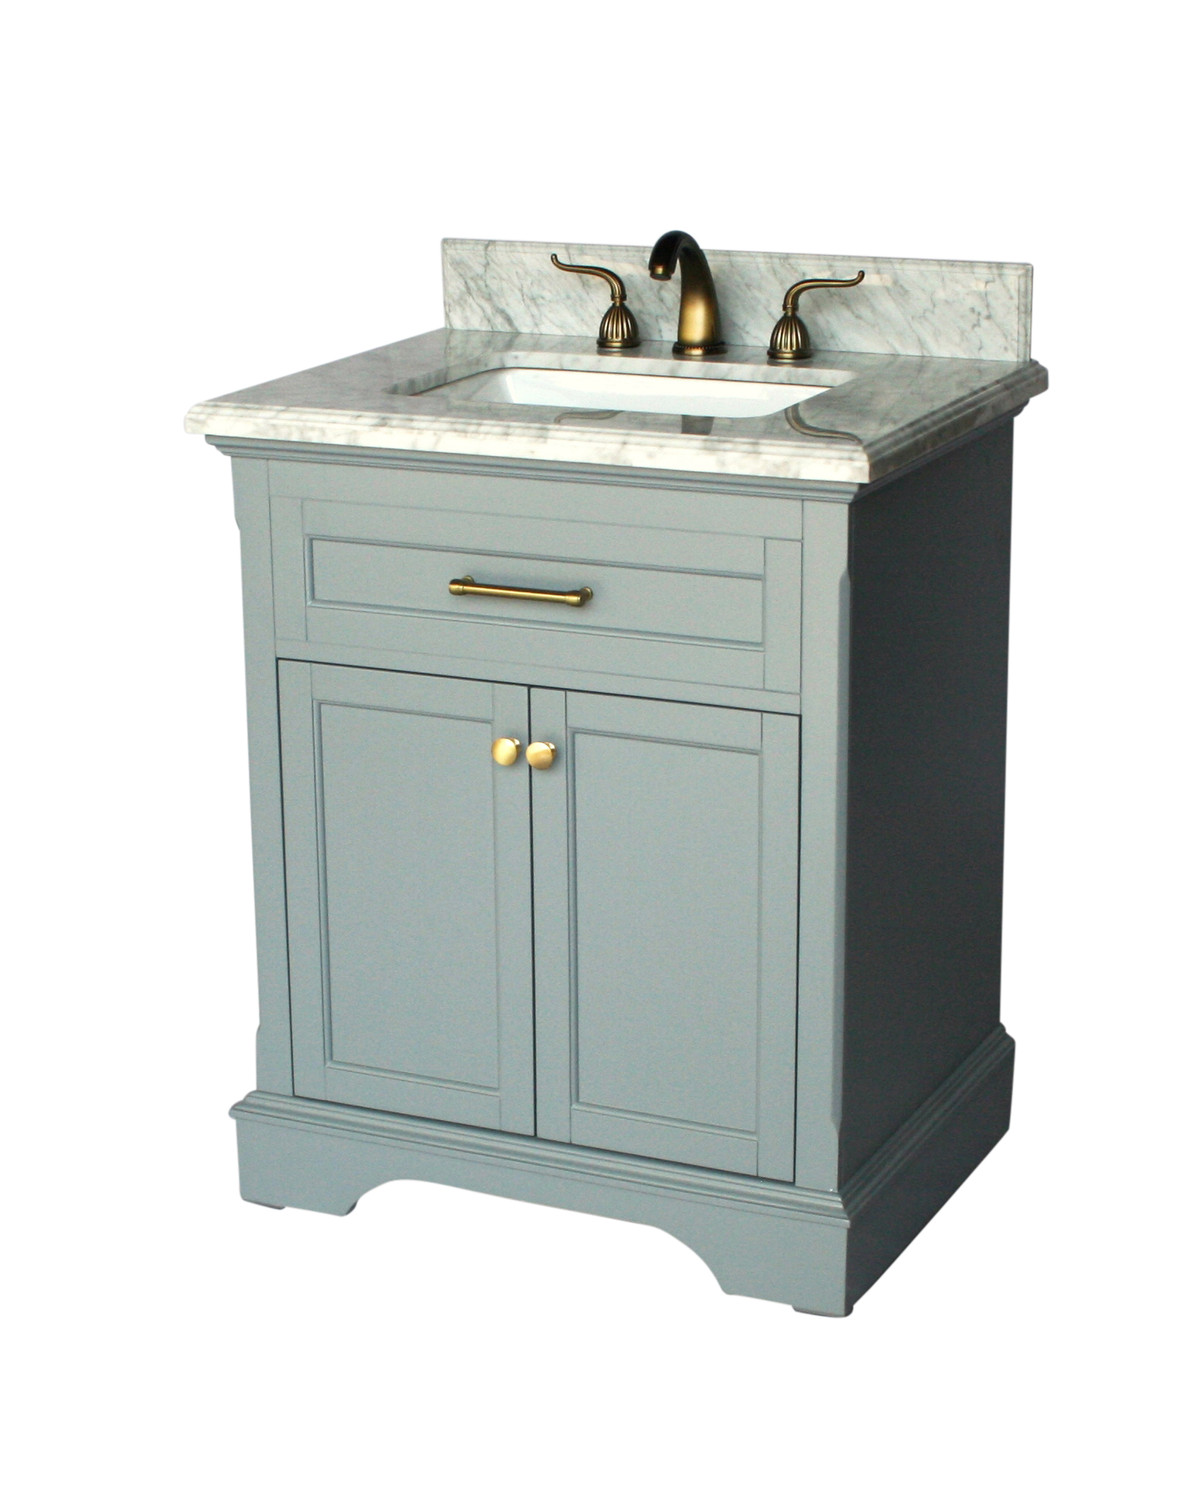 28" Adelina Contemporary Single Sink Bathroom Vanity Italian Carrara Marble Top in Grey Finish